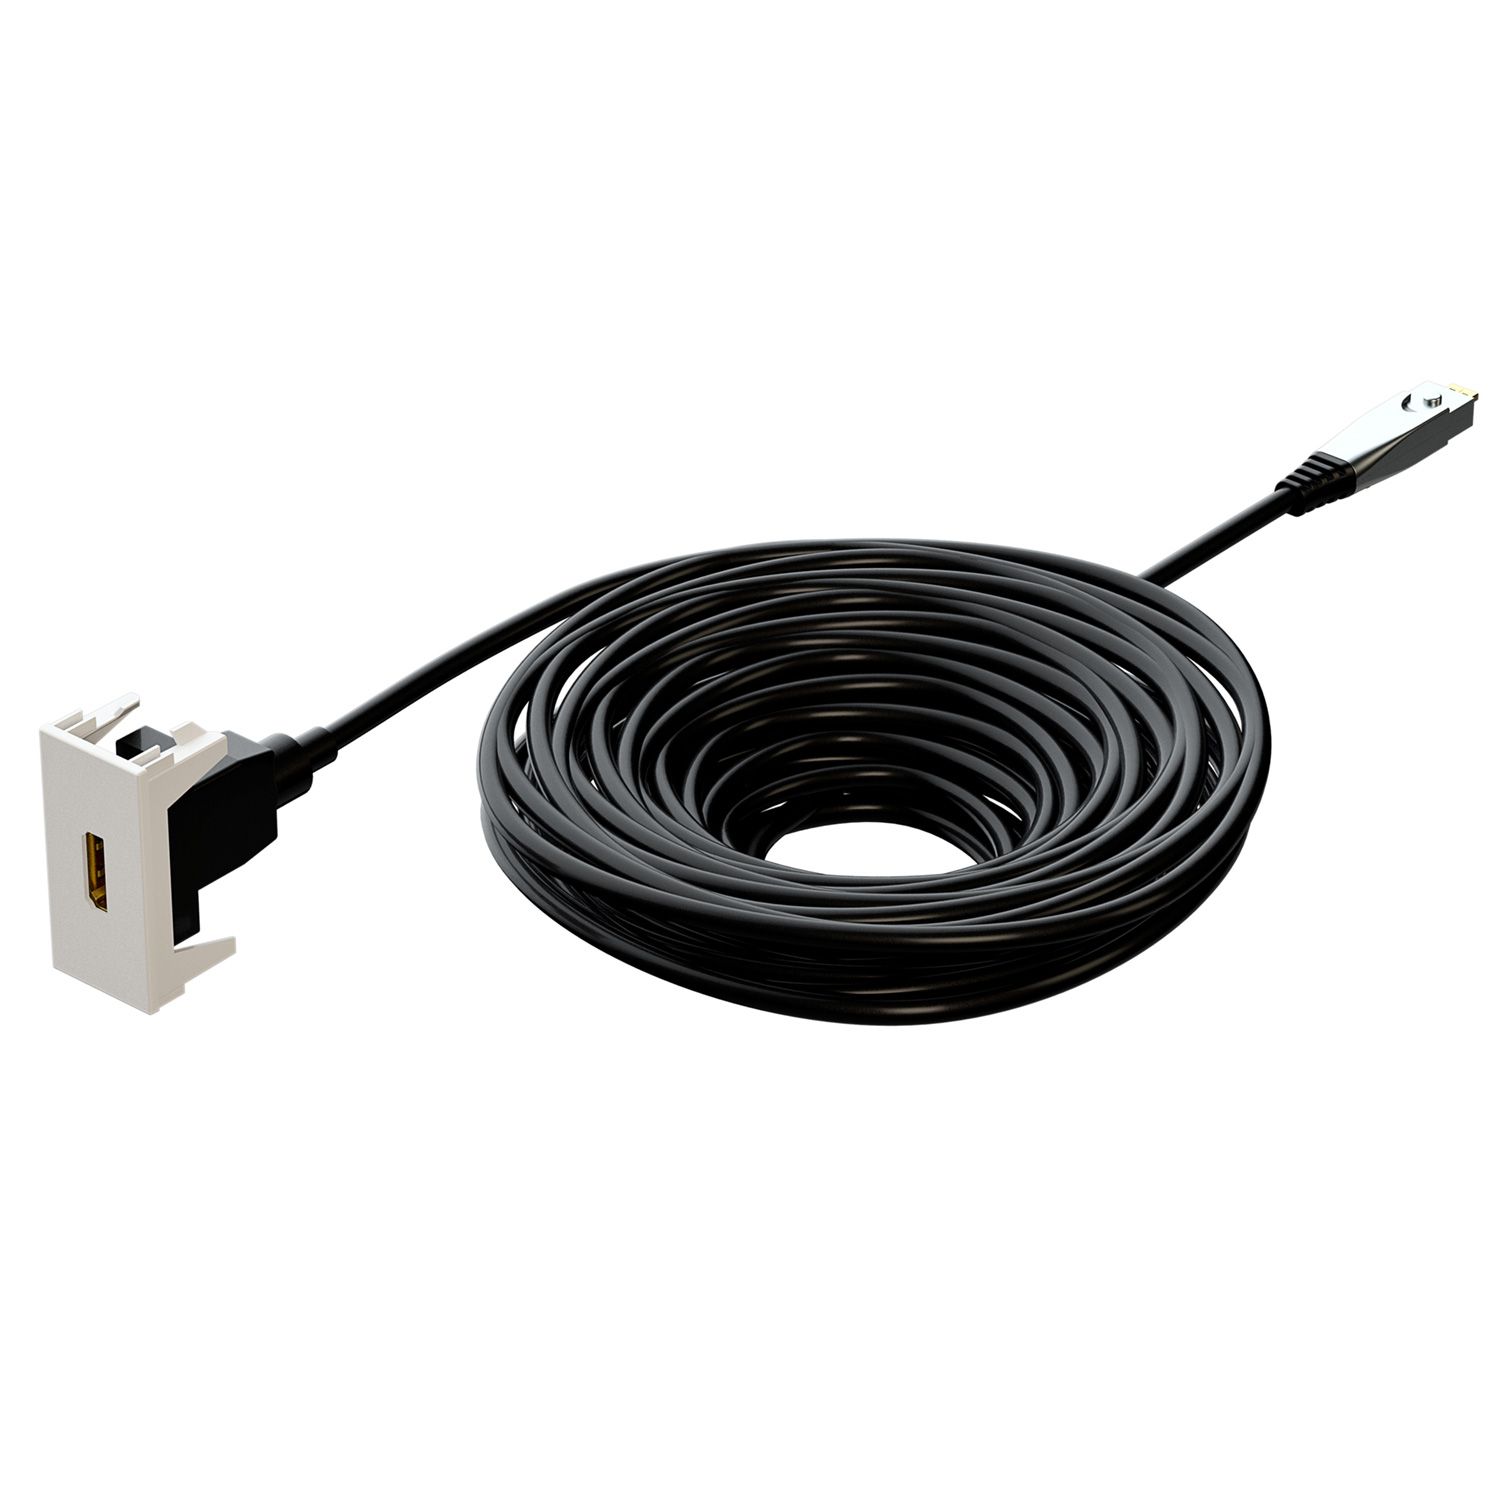 Kindermann Konnect flex 45 click HDMI AOC cable 10 m cable length - fibre optic cable with Ethernet - half screen - white